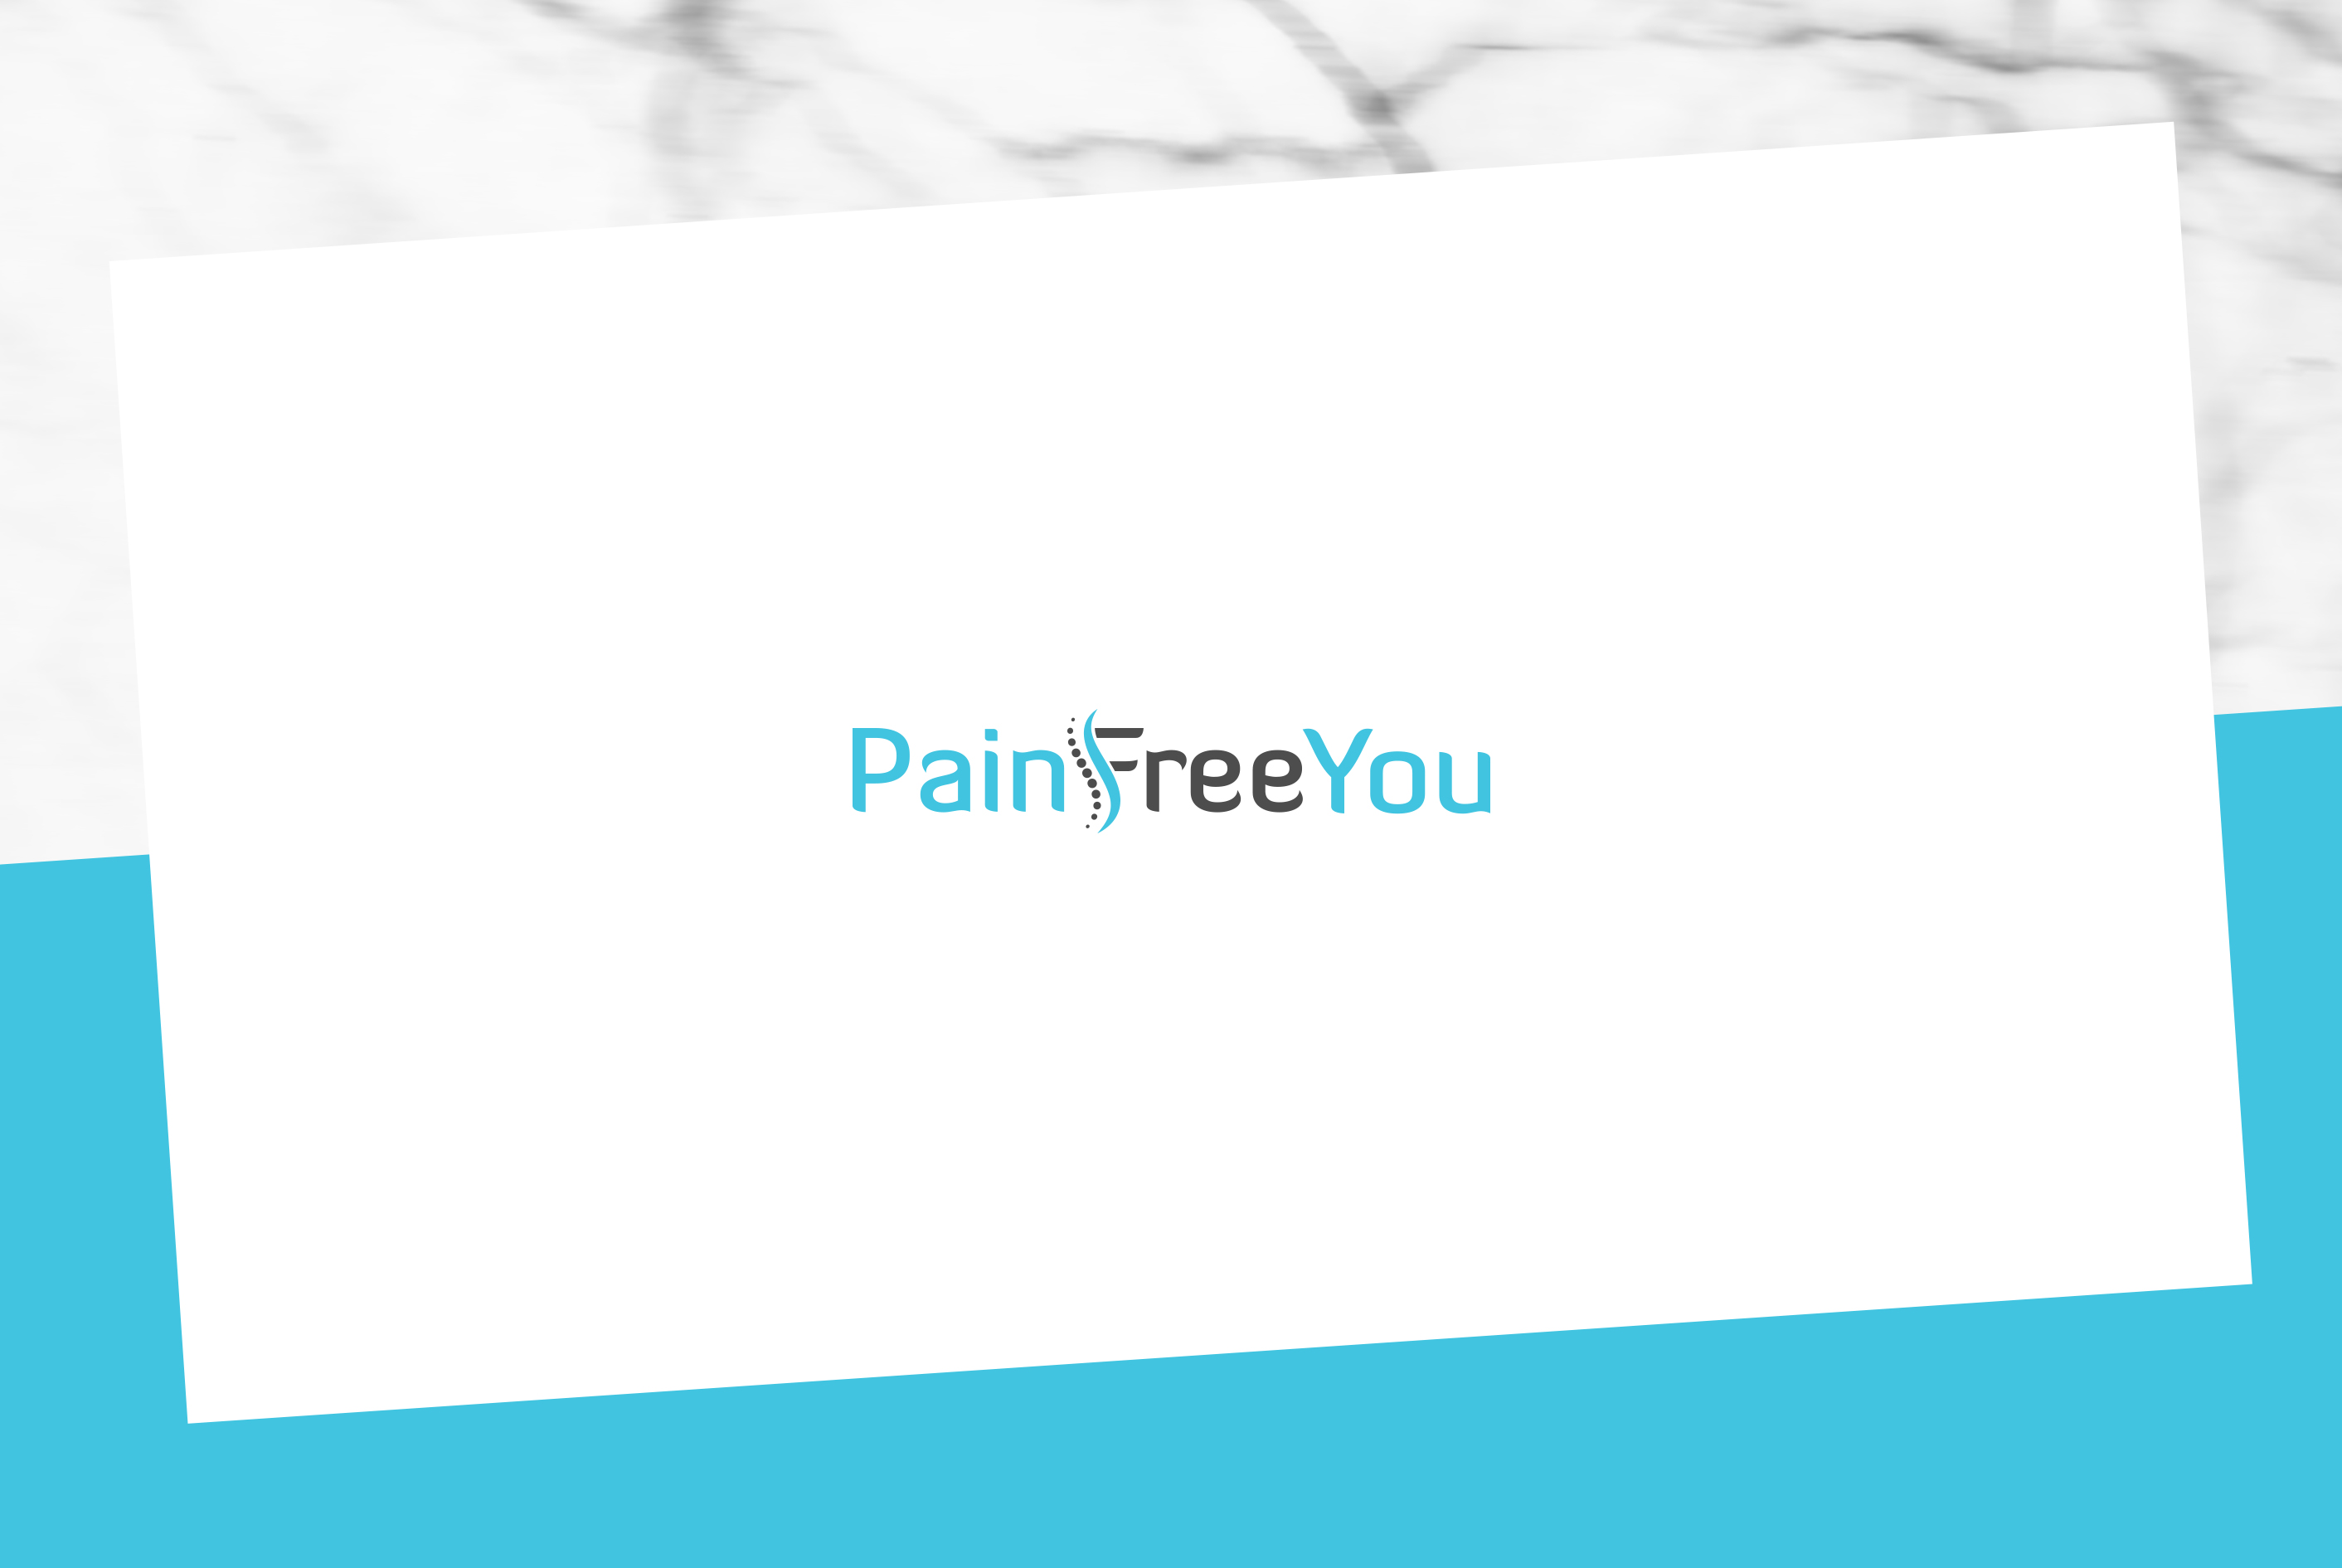 Pain Free You Design #1